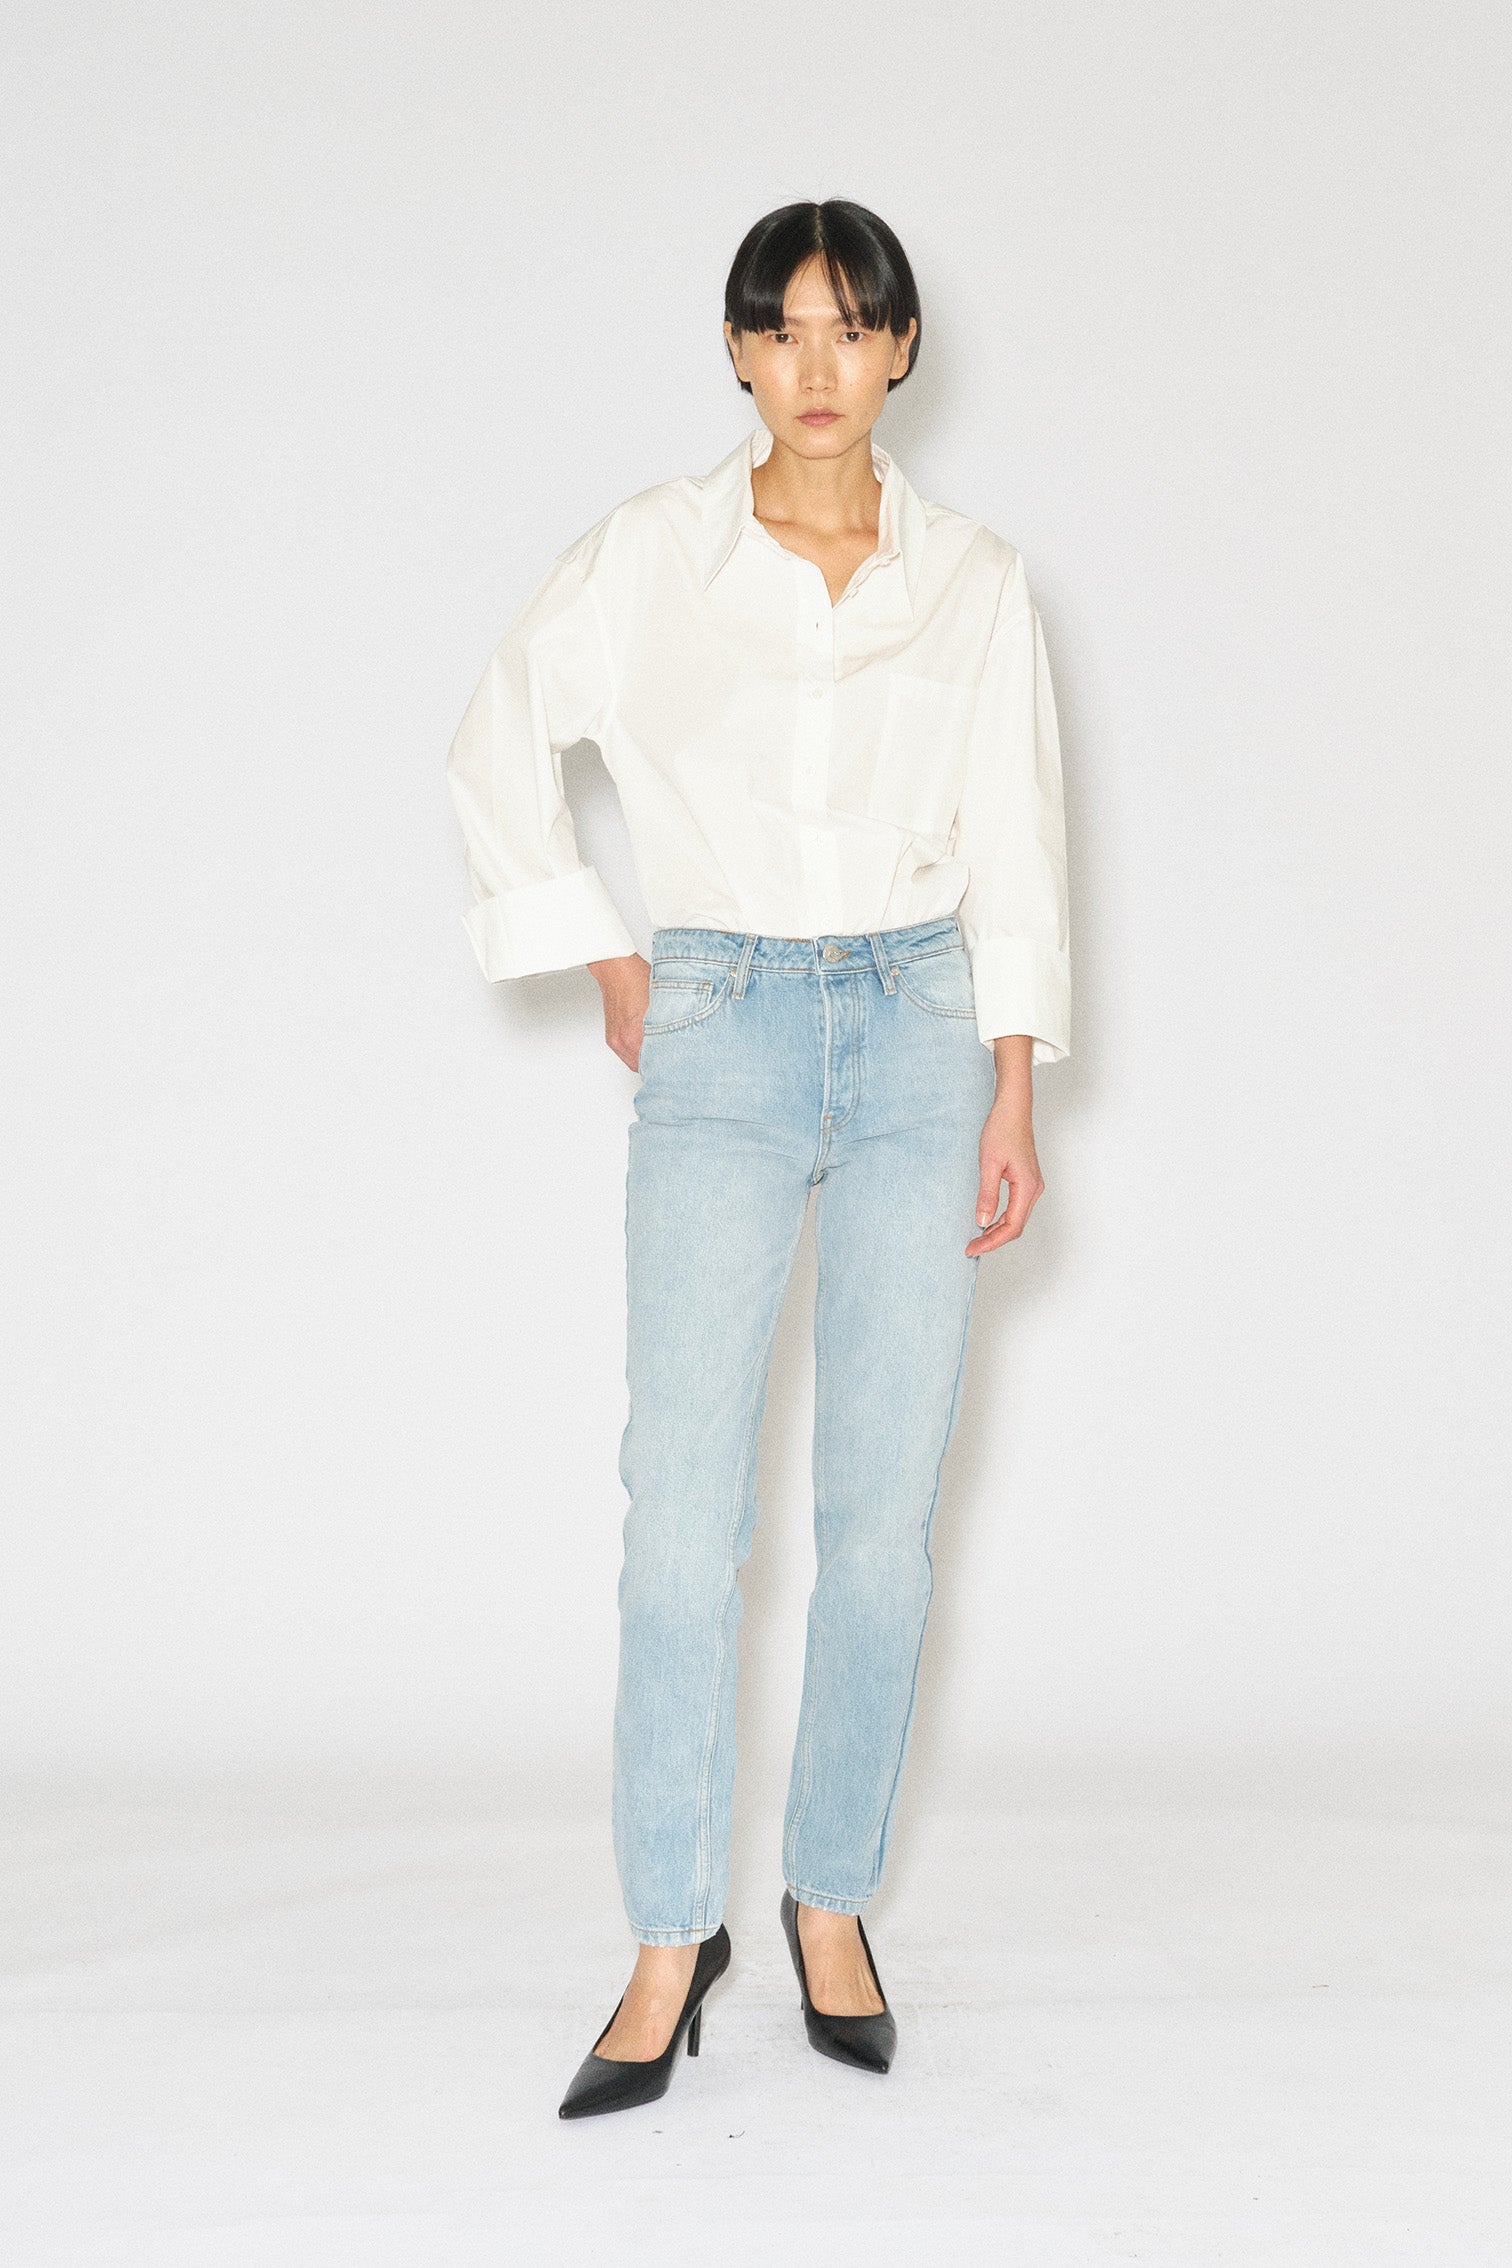 Tomorrow TMRW Hepburn Jeans - Versailles Dist. Jeans & Pants 51 Denim Blue